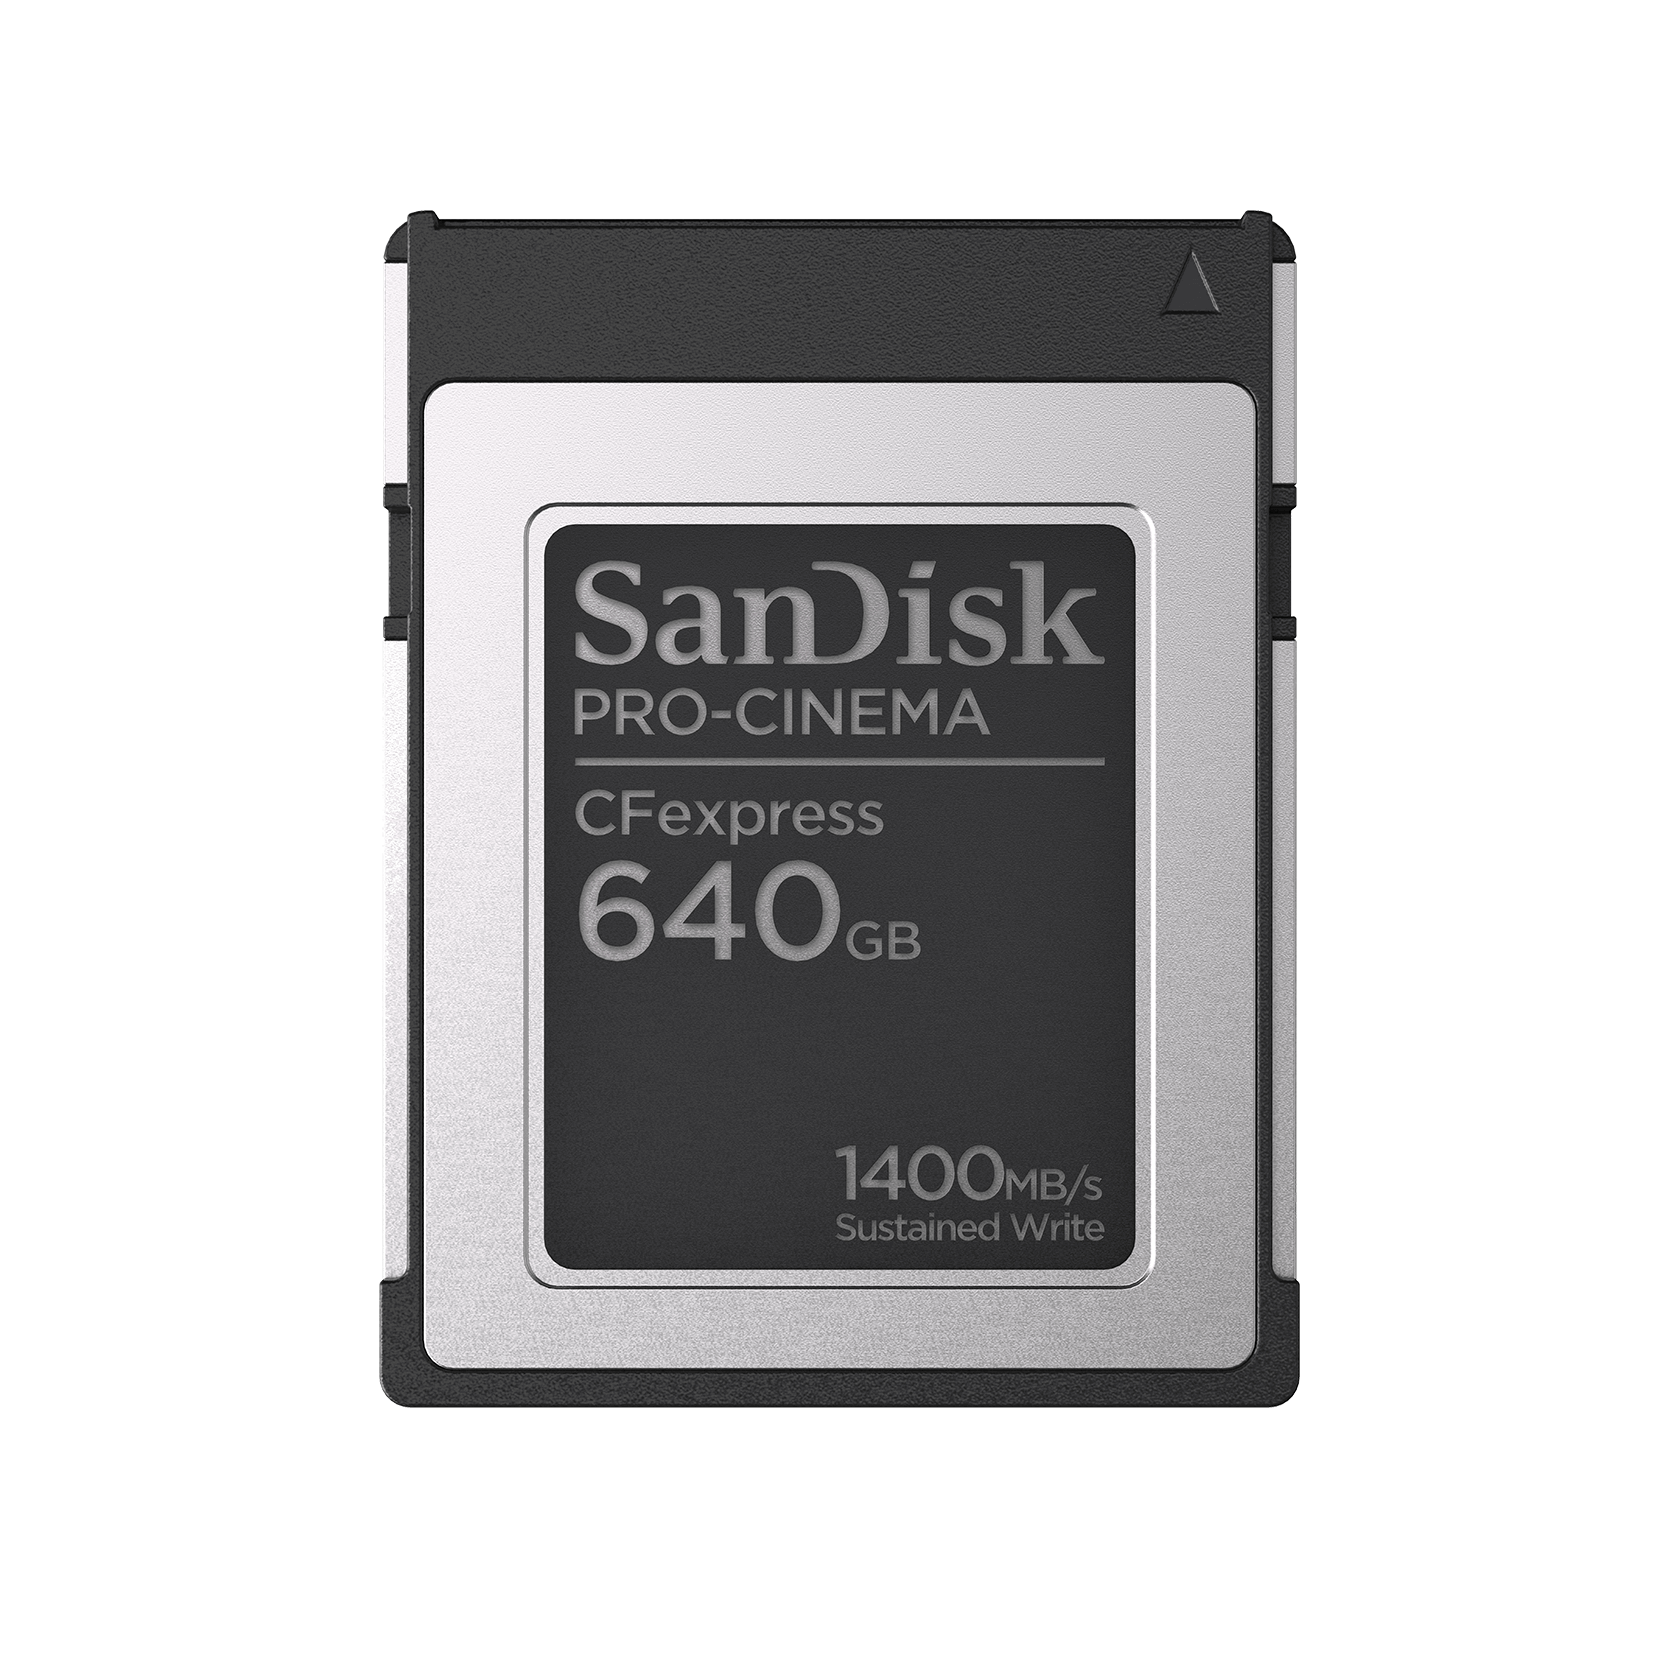 SanDisk 640GB GL- PRO-CINEMA CFexpressâ„¢ Type B Memory Card - SDCFEC-640G-GN4NN